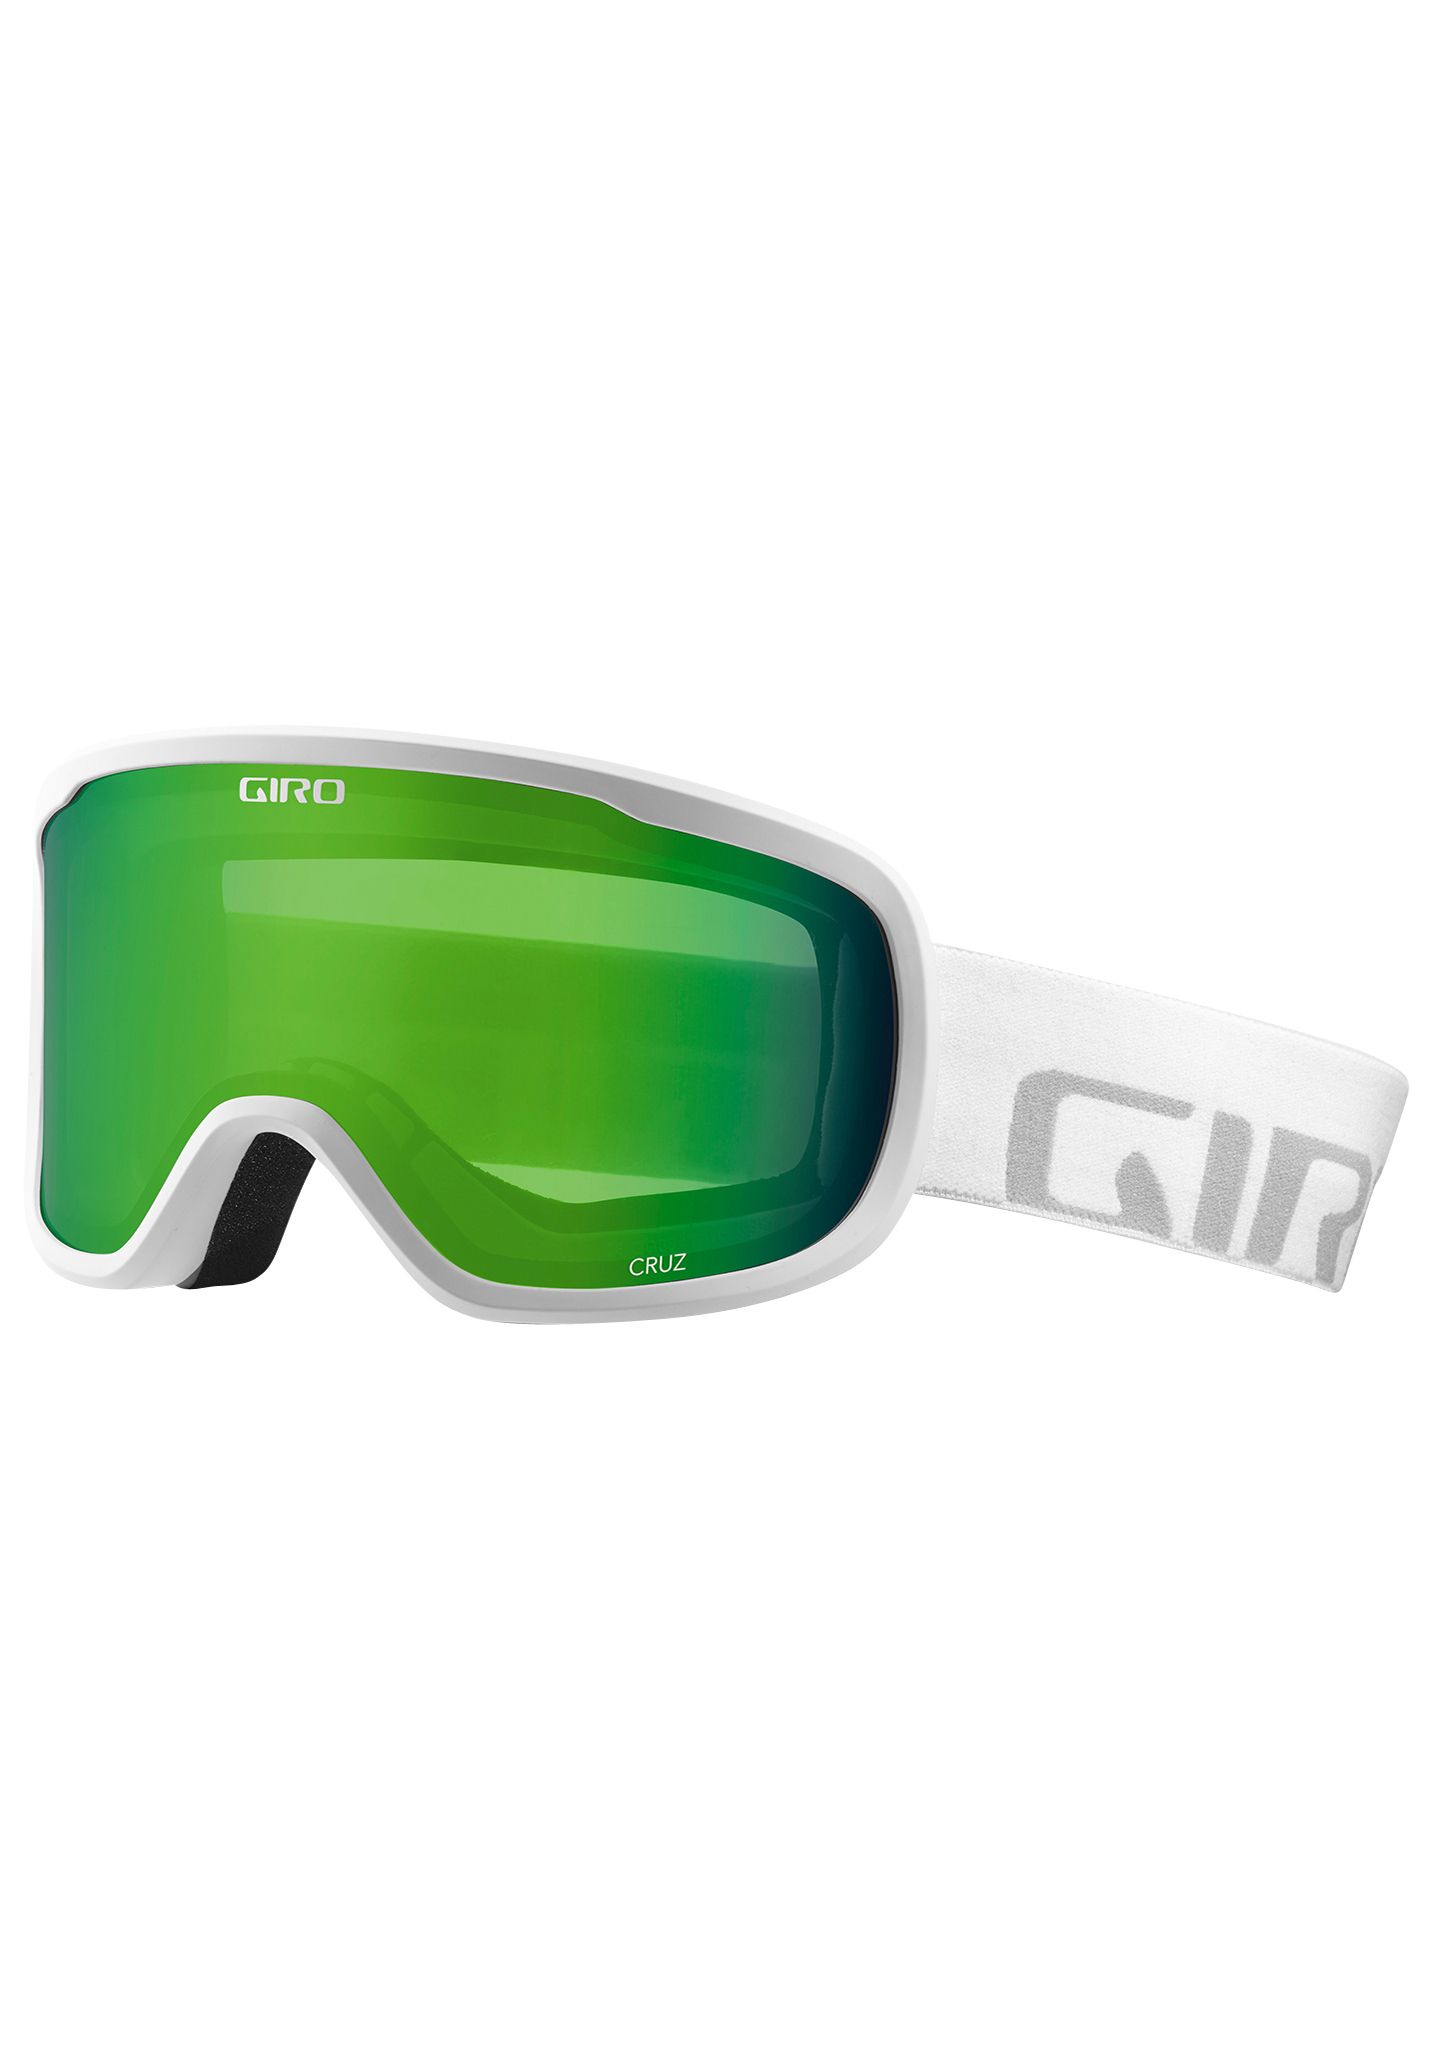 Giro Cruz Snowboardbrillen weiße wortmarke/lodengrün One Size